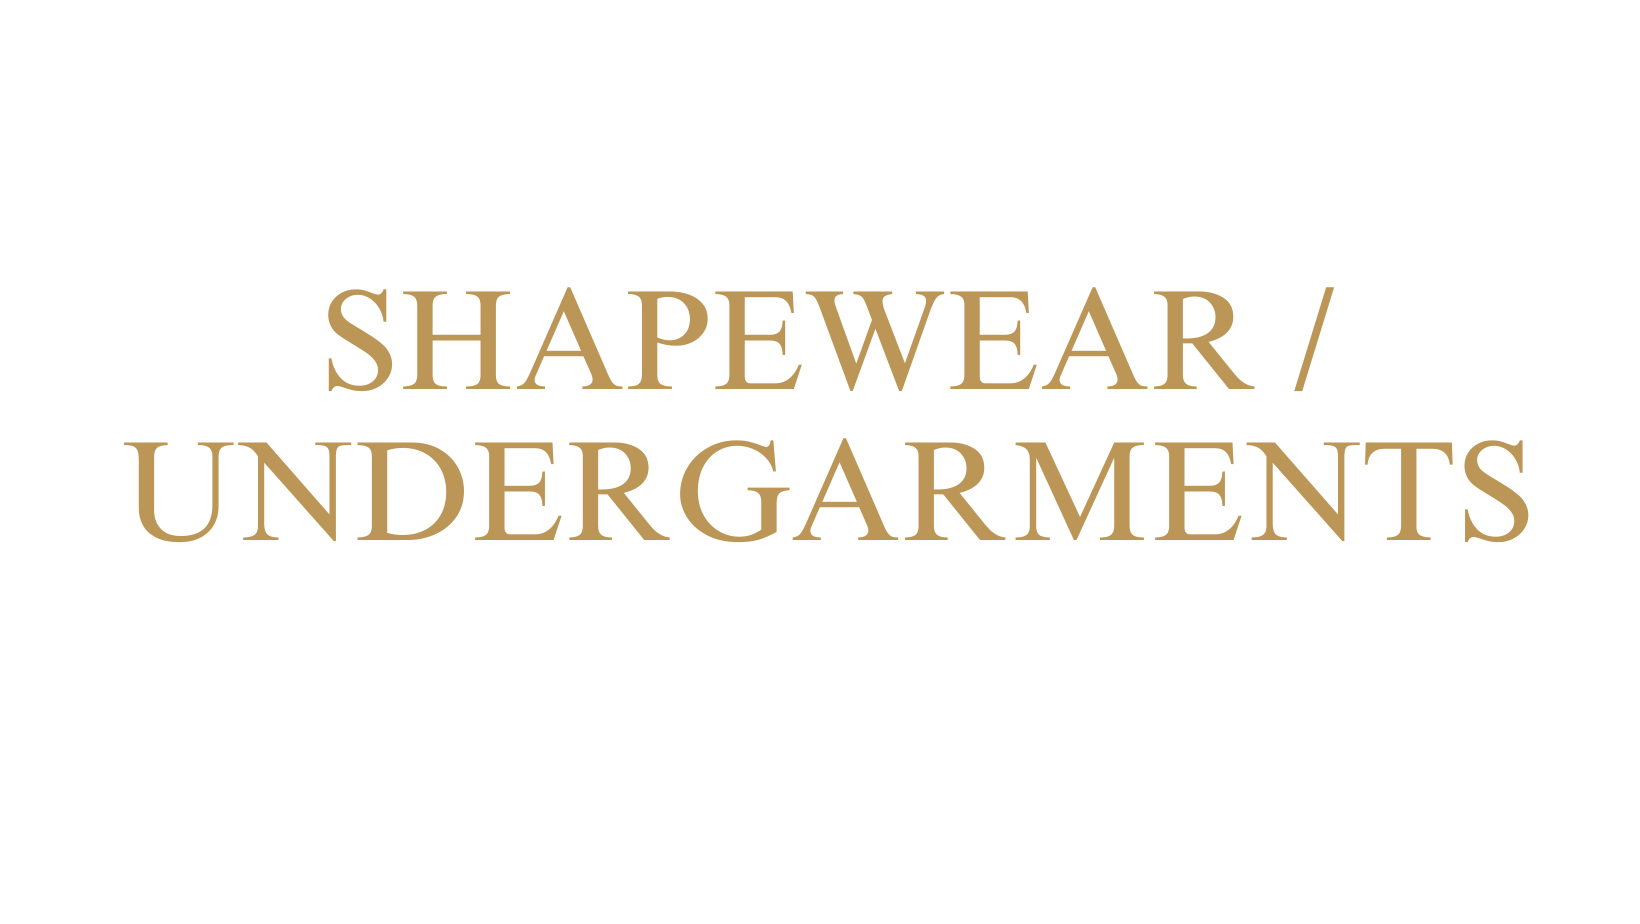 Shapewear / Undergarments